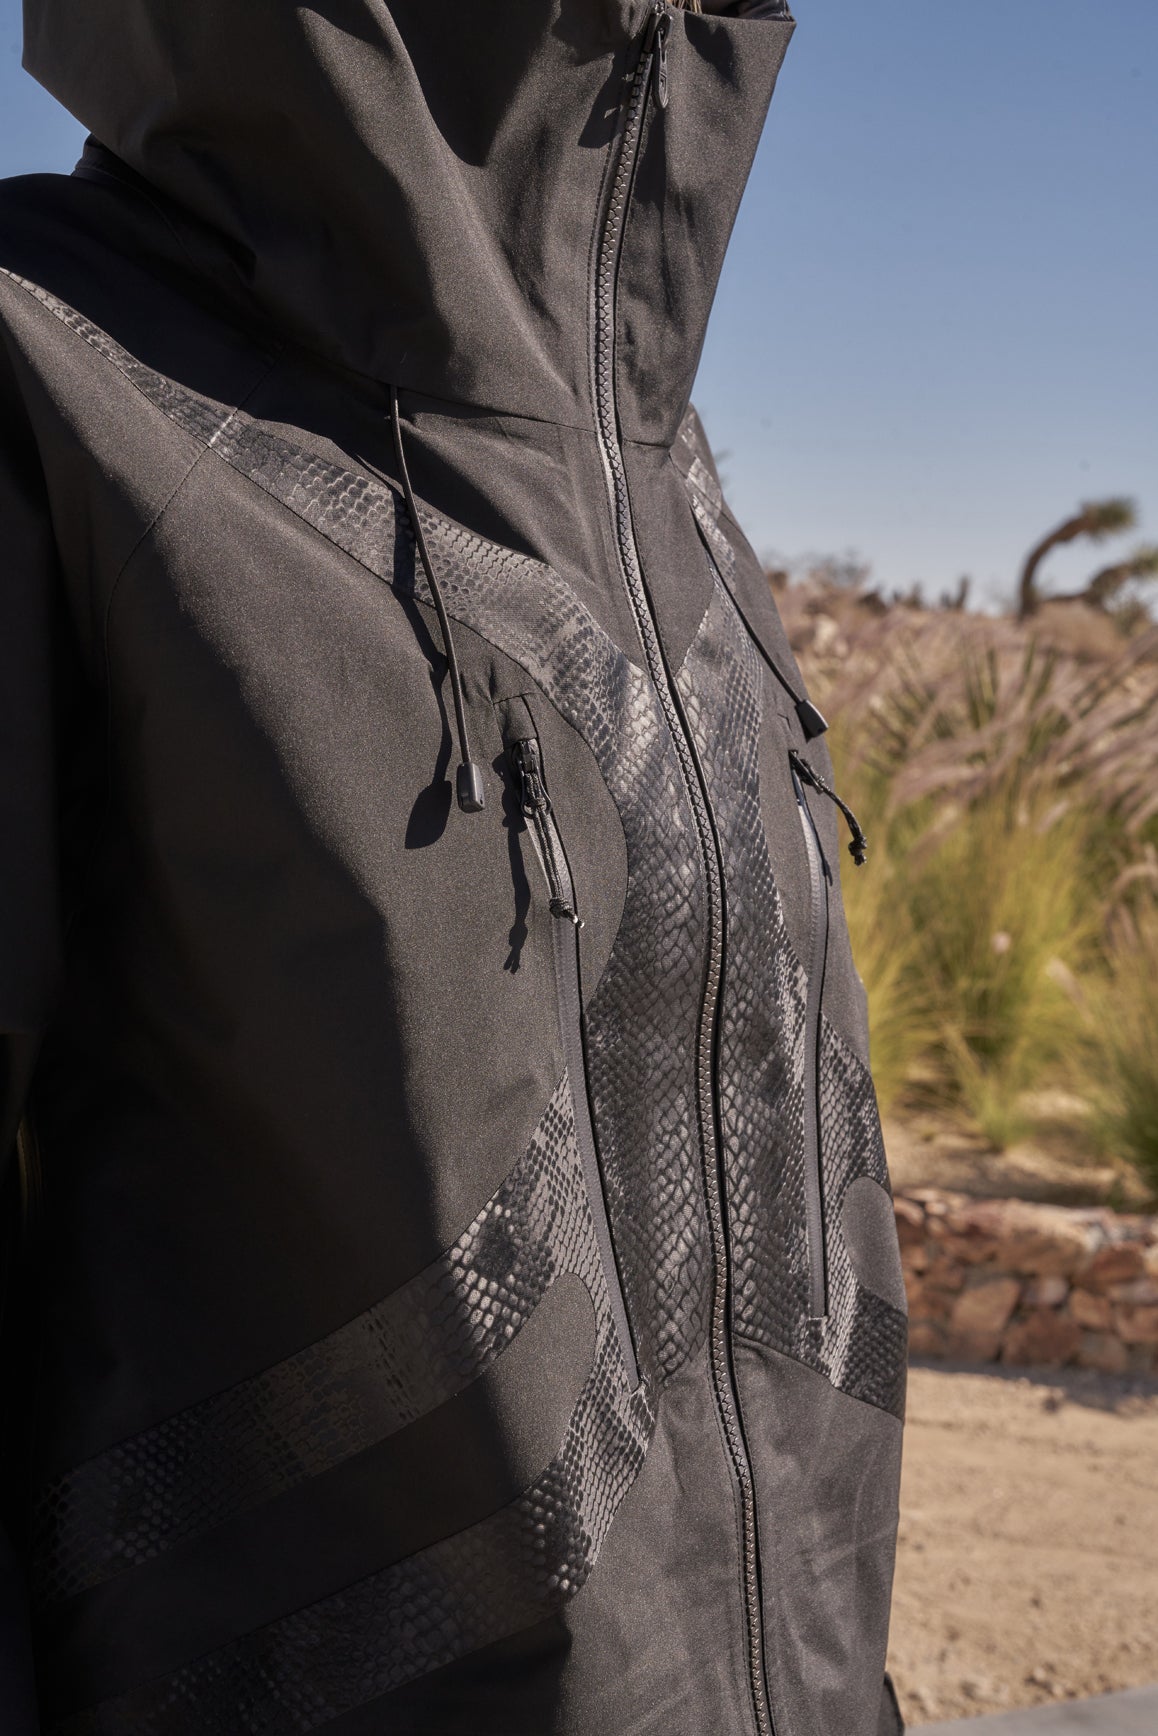 3L Waterproof Hardshell Performance Jacket | All-Weather Lightweight - Black Python -details